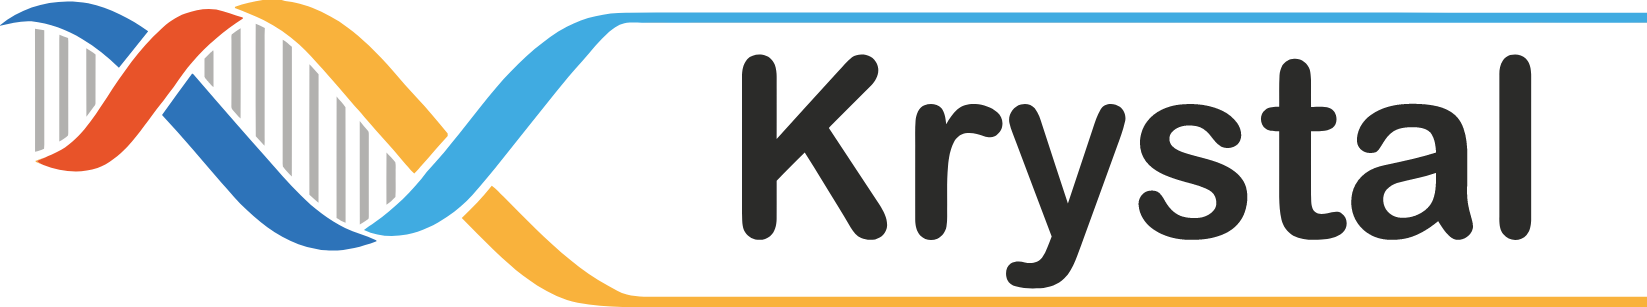 Krystal Biotech logo large (transparent PNG)